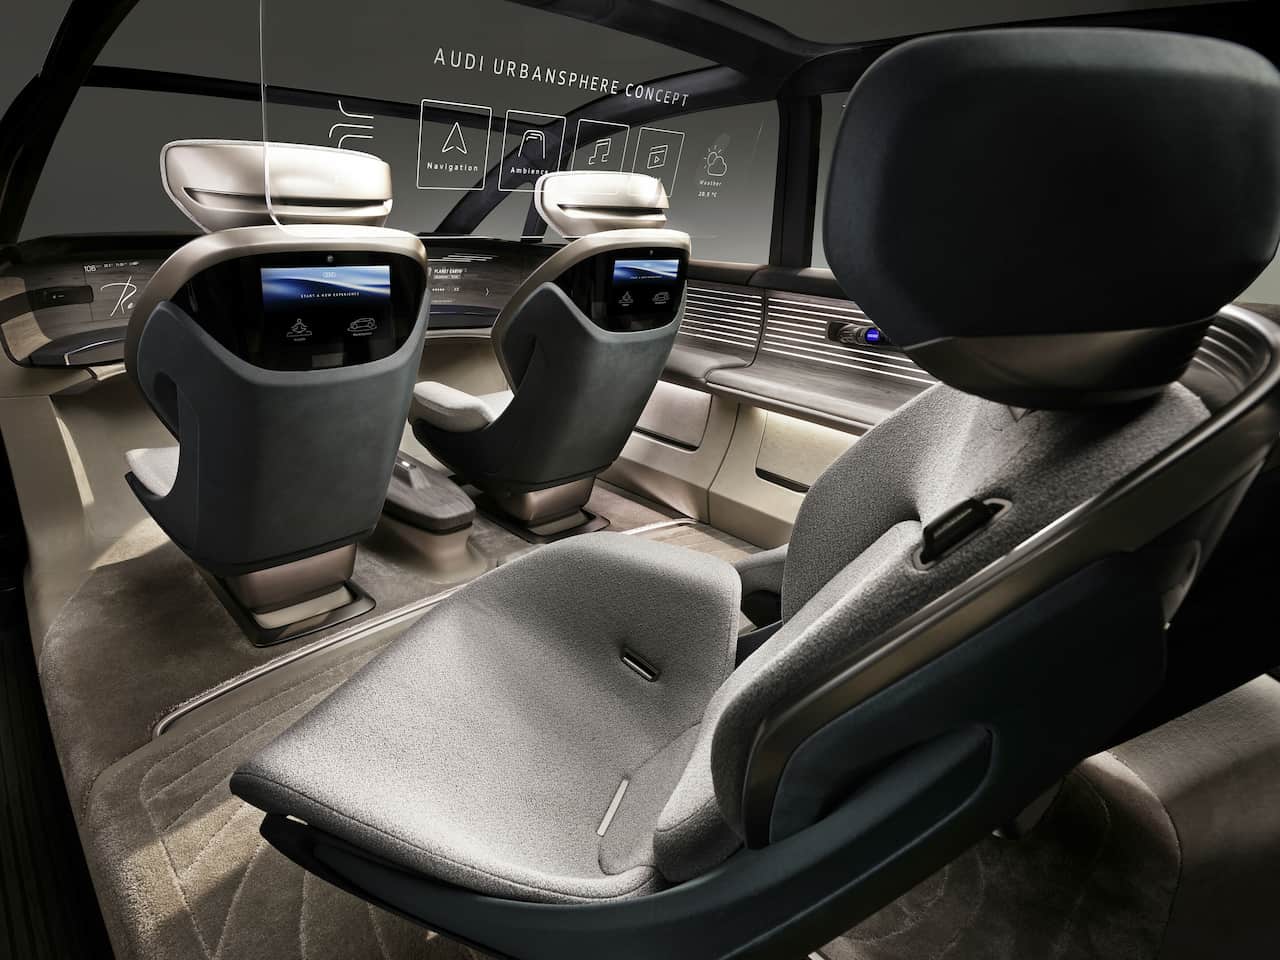 Audi urbansphere interior rear seats